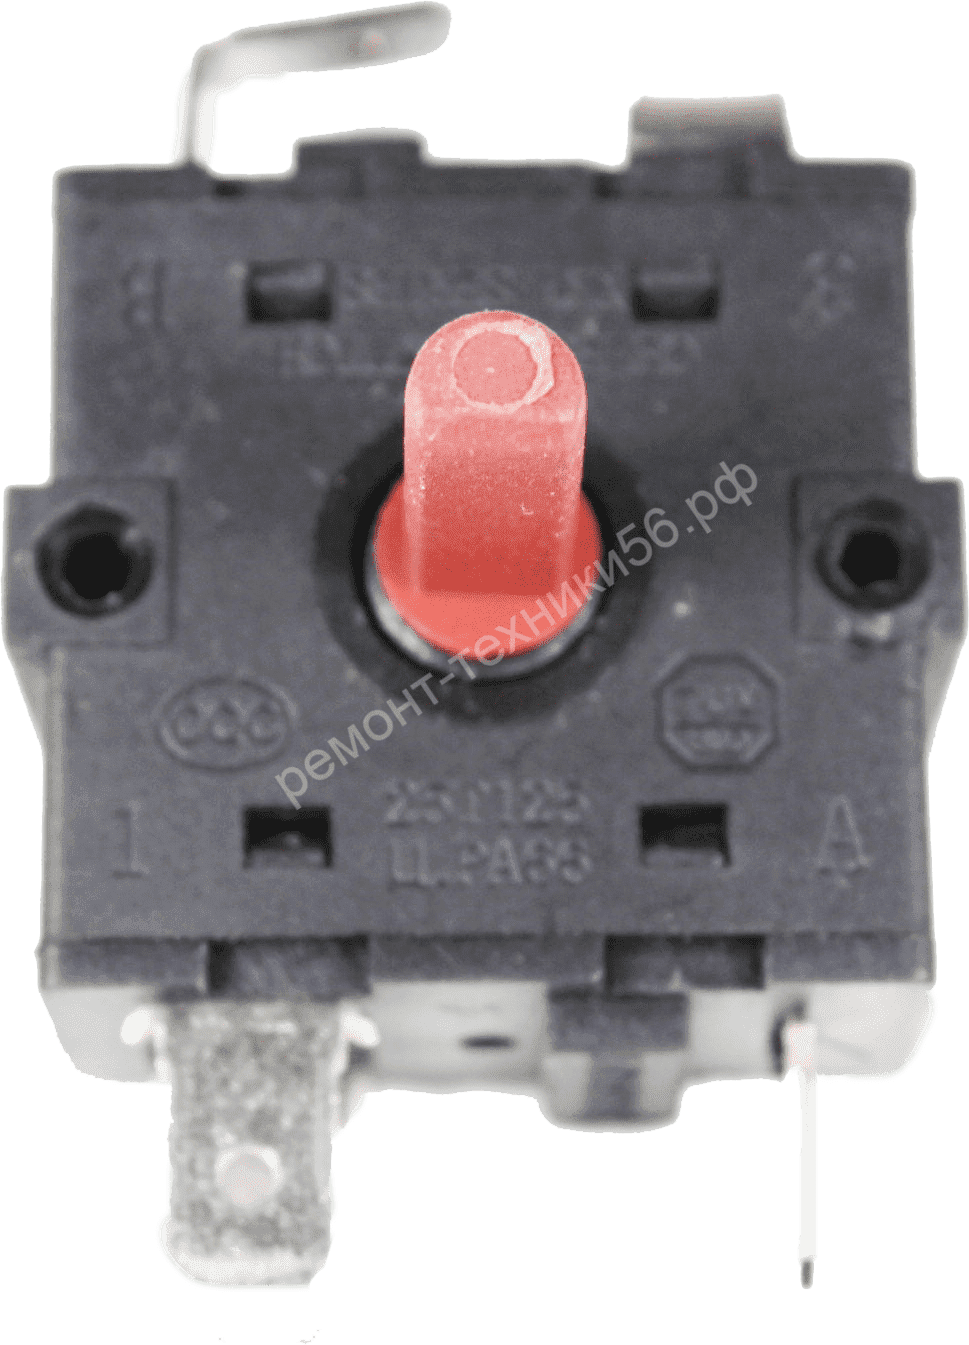 Переключатель Rotary Switch XK1-233,2-1 Royal Thermo RTH-RE2 по выгодной цене фото3